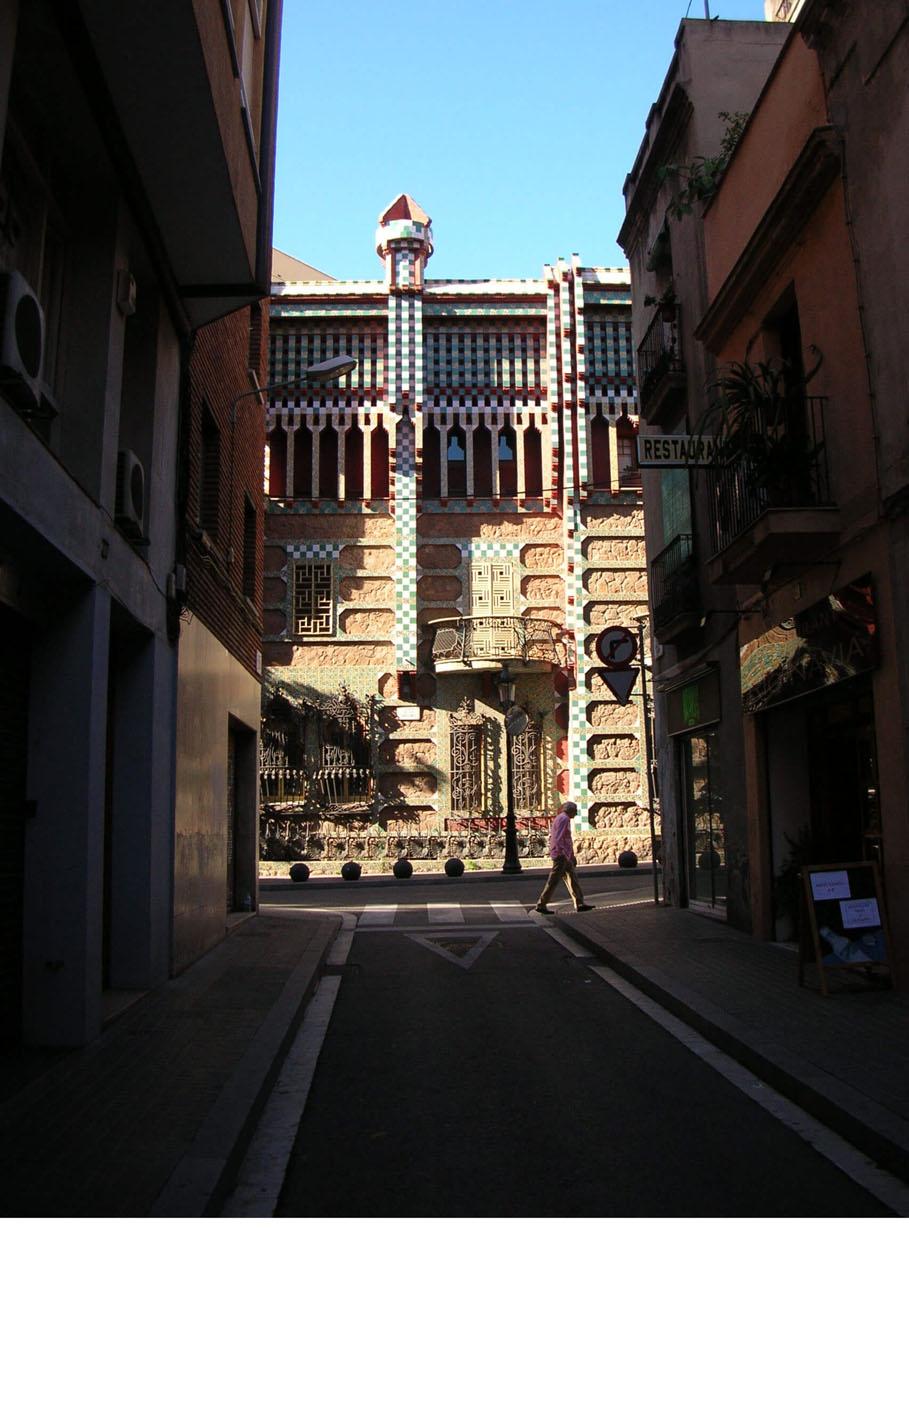 1 Casa Vicens - carrer de les Carolines, 20-26 - architecte Antonio Gaudi - 1883